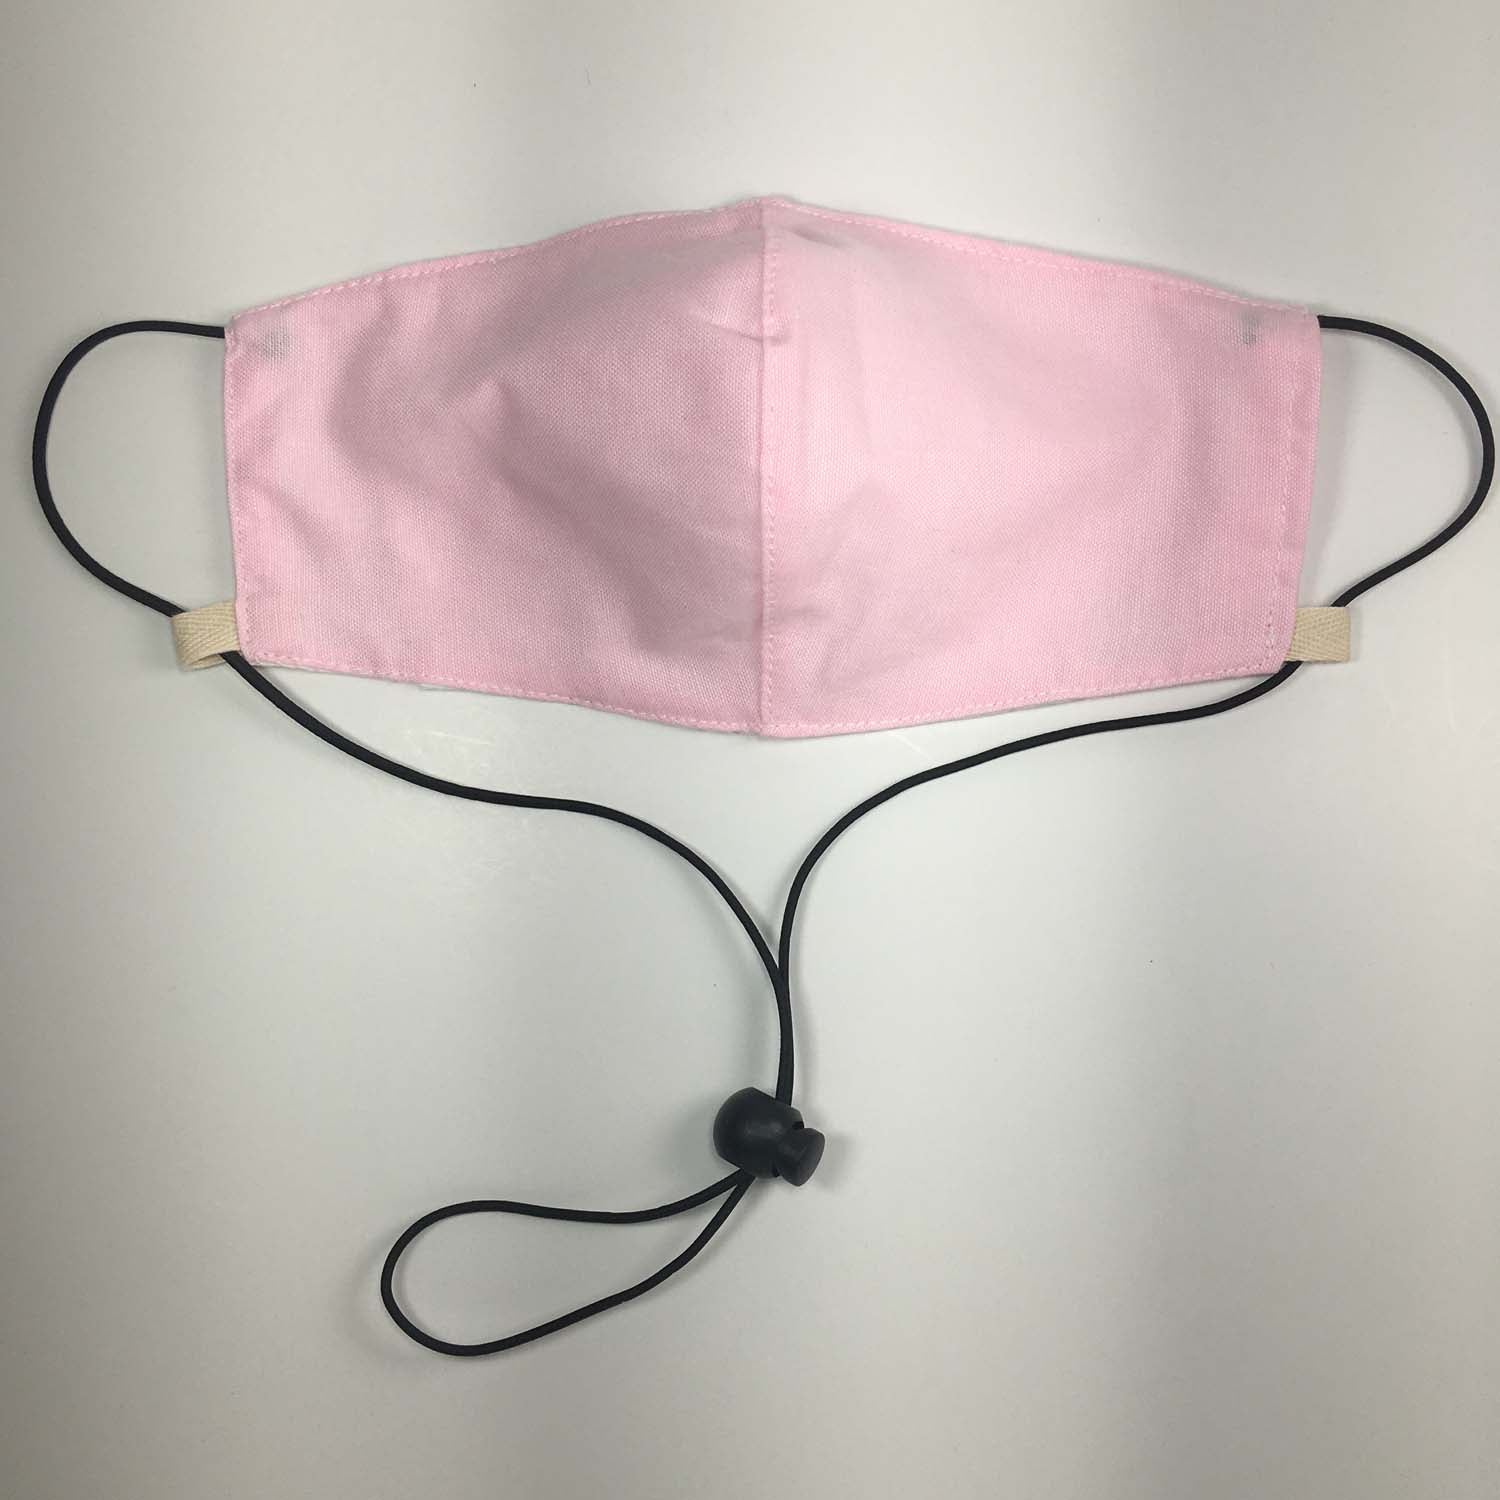 MEDIUM Oxford Cotton Adjustable Face Masks Filter Pocket - Baby Pink